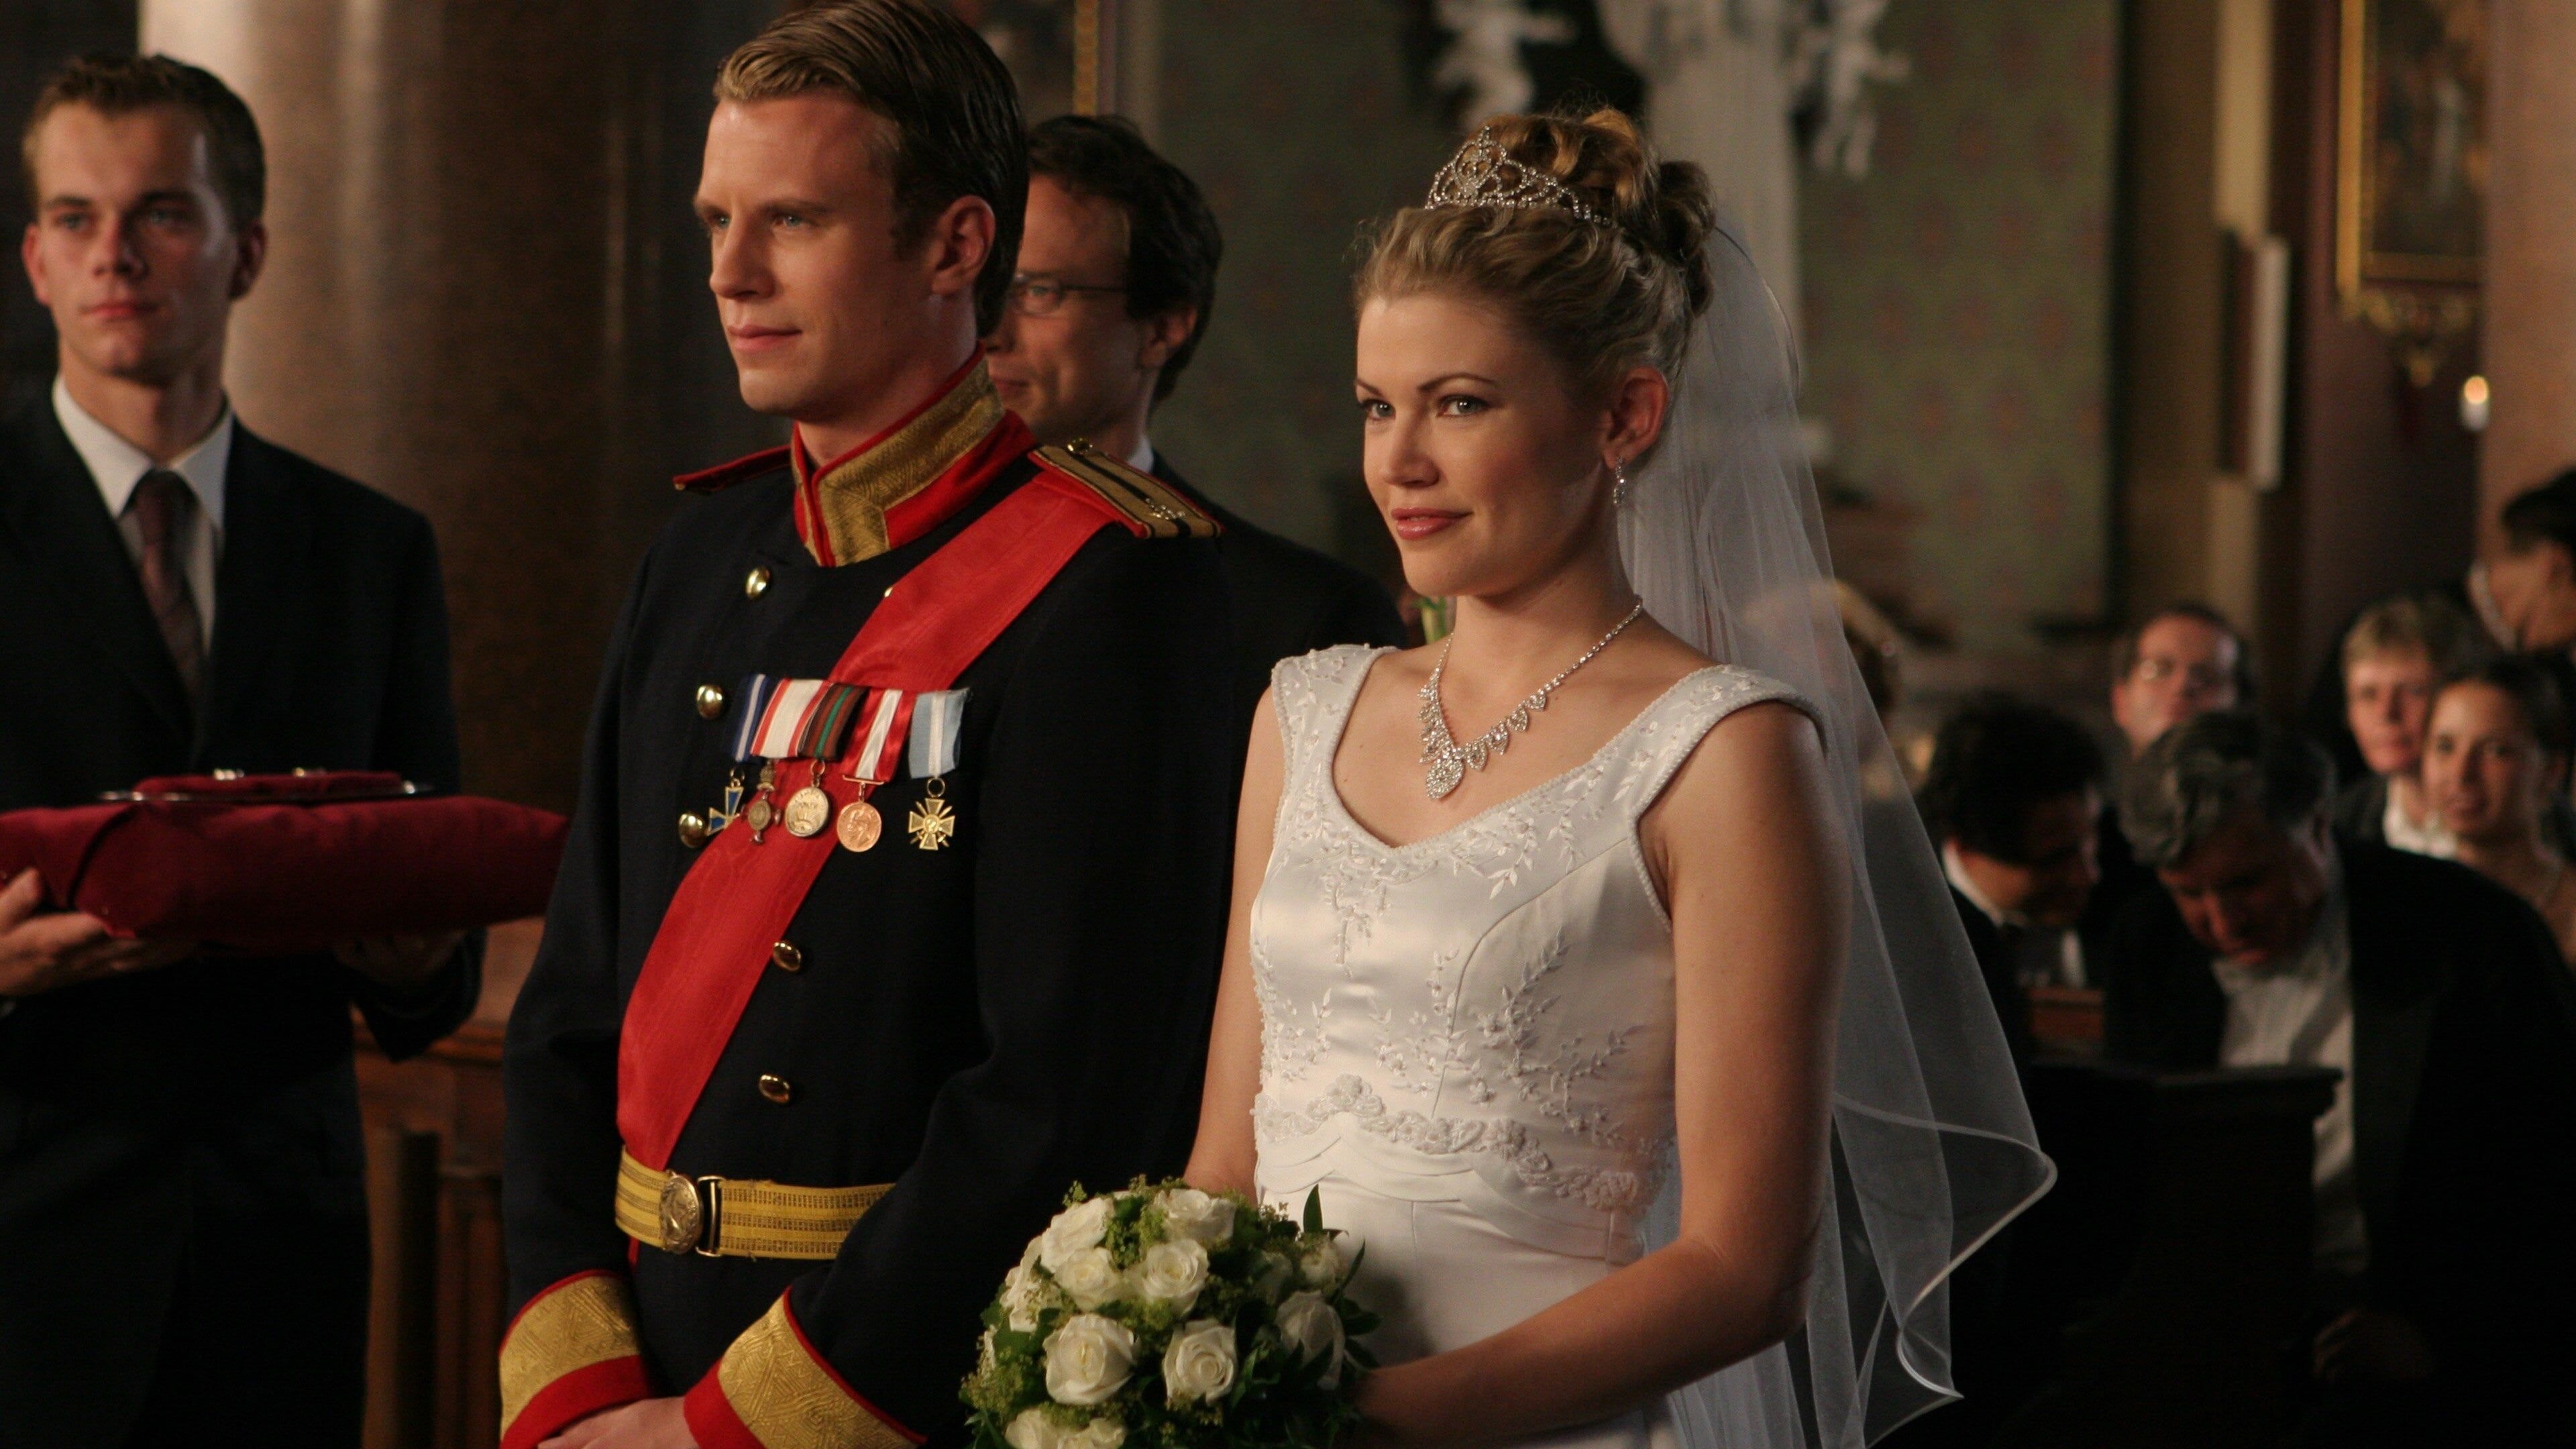 Royal: The Prince & Me 2, Wedding, Comedy Film, Edvard III, King of Denmark, Paige Morgan. 3840x2160 4K Background.